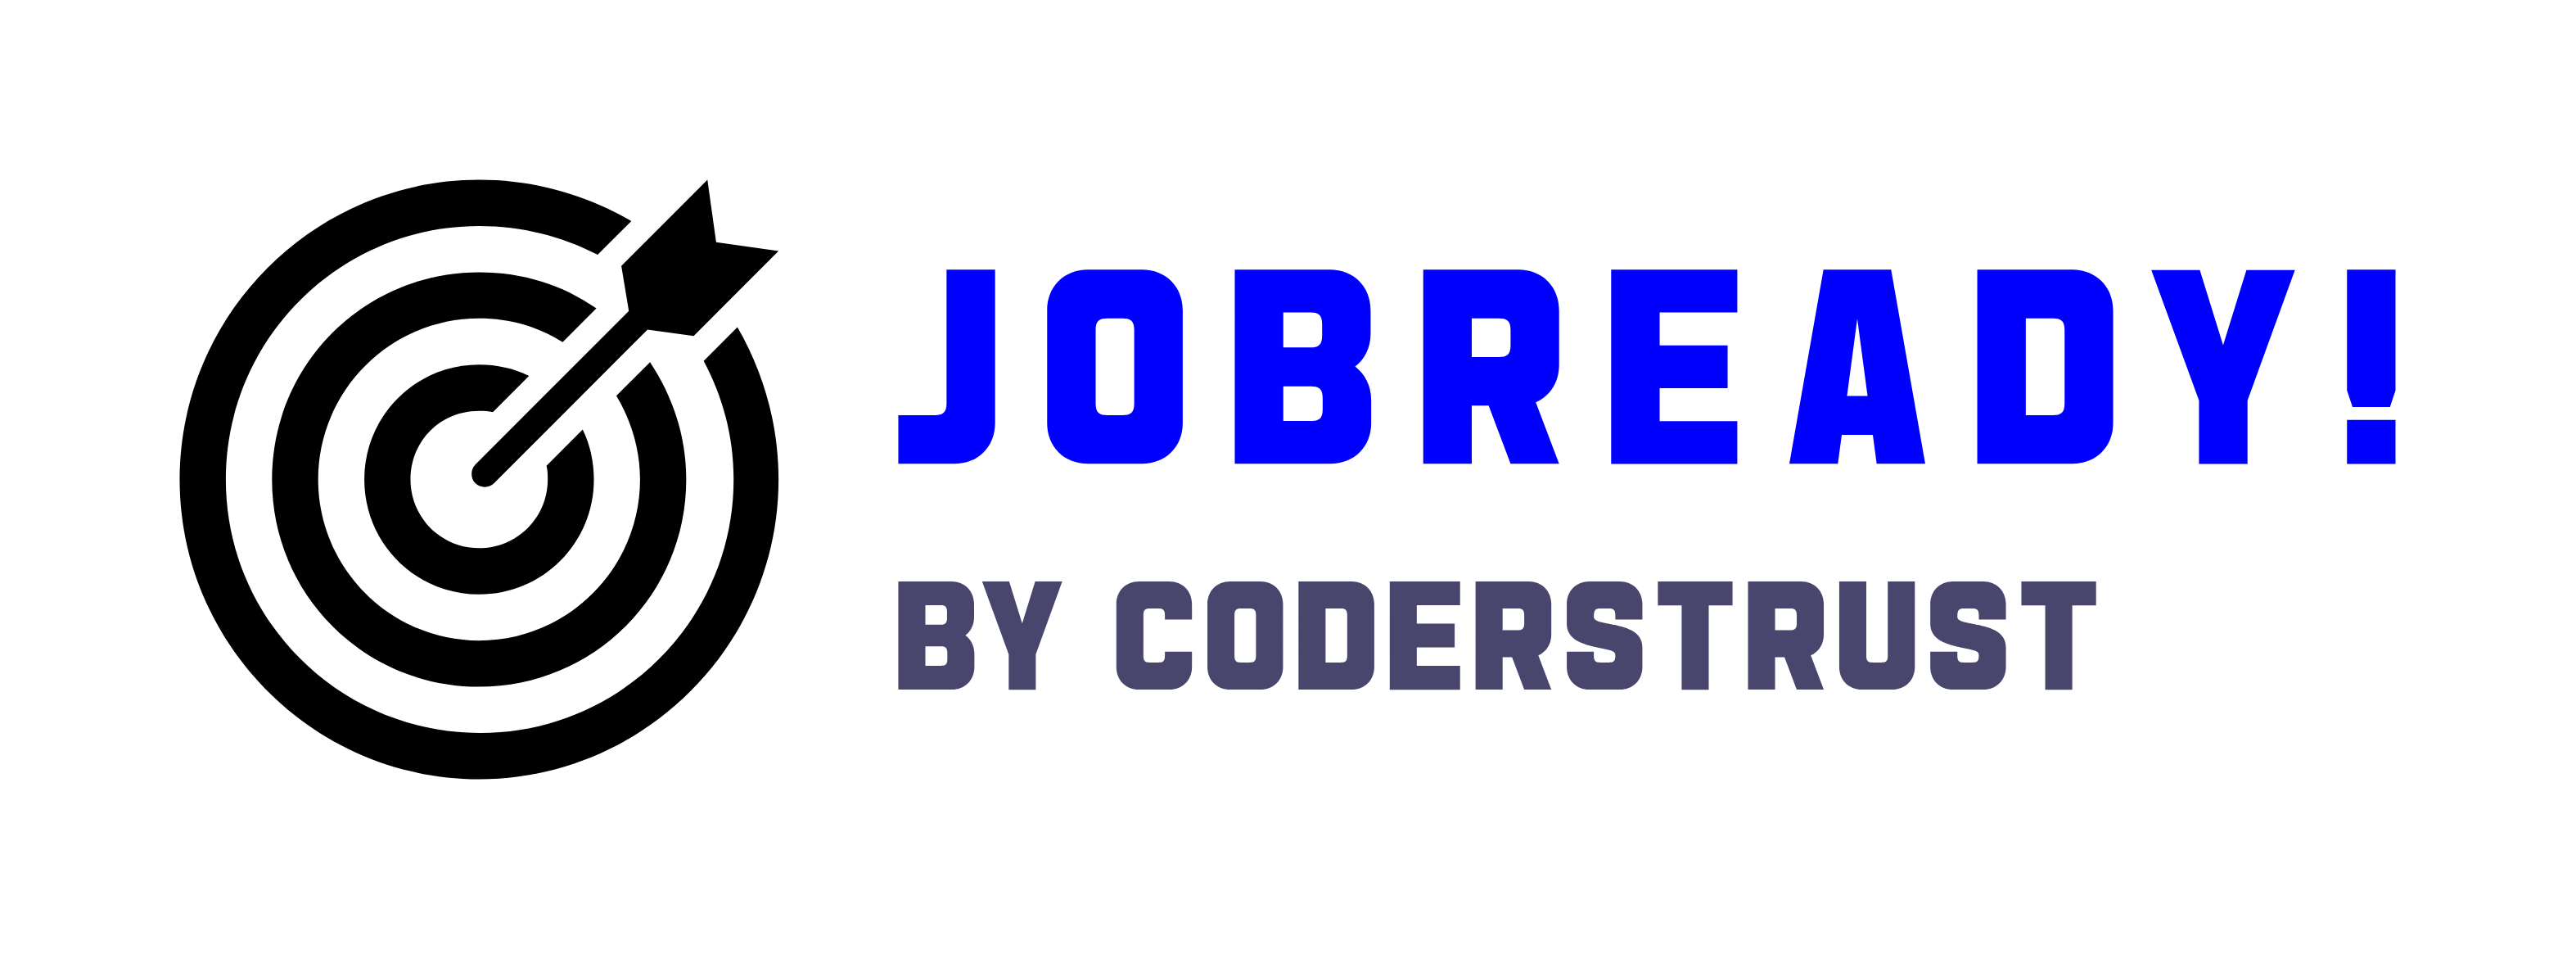 CodersTrust JobReady!